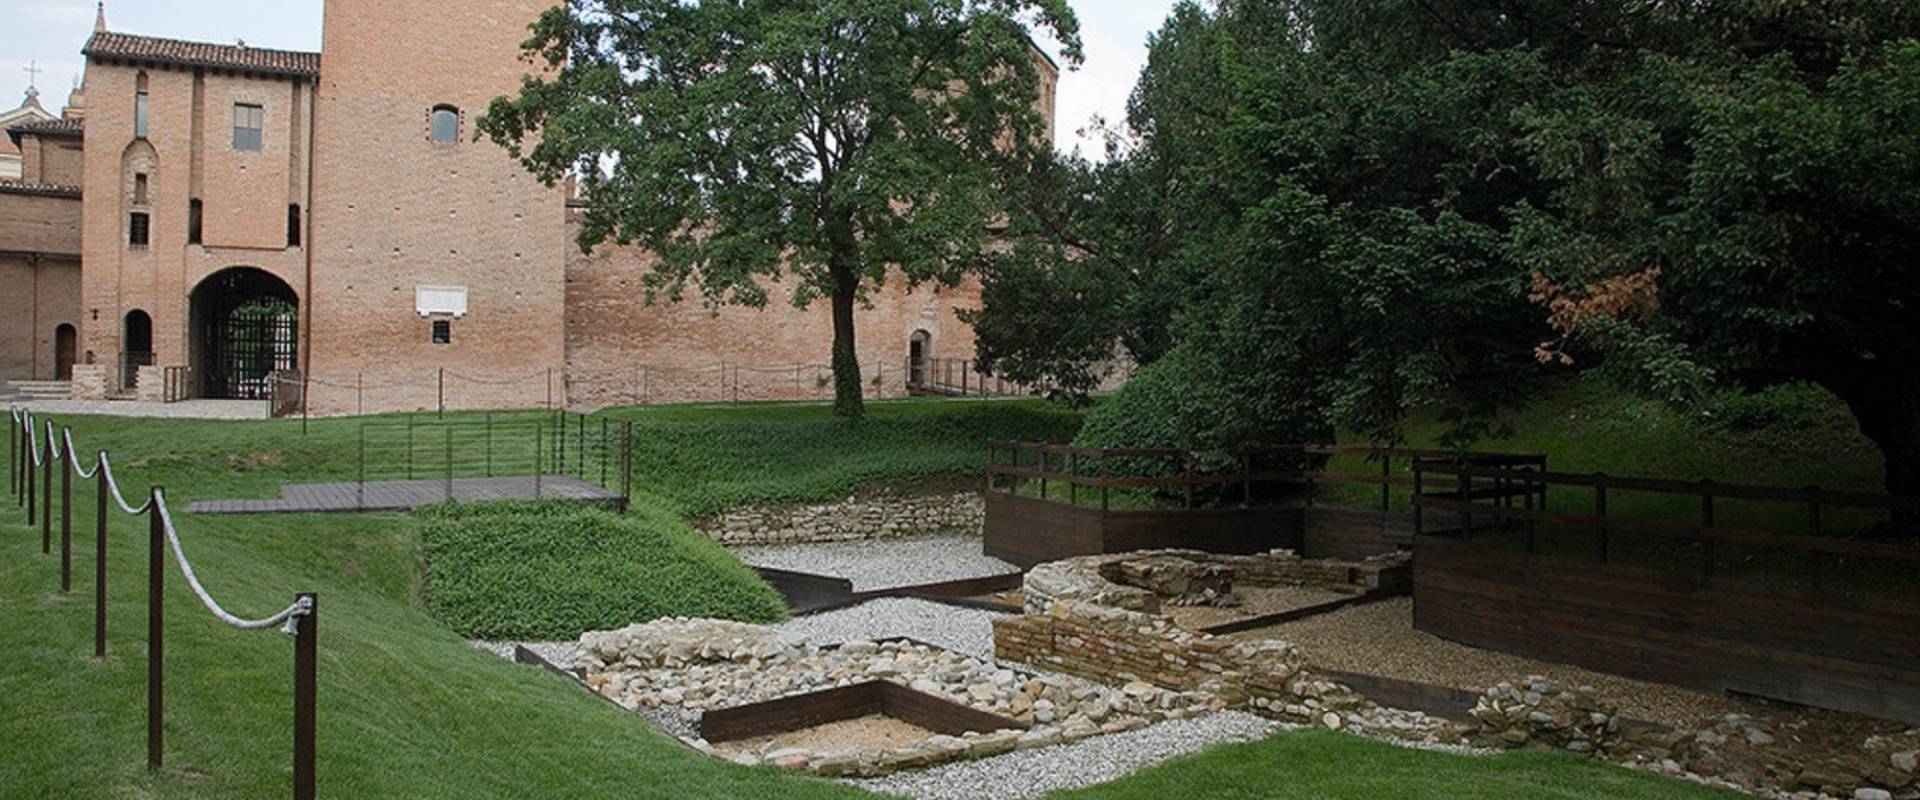 The Castle's archaeological park photo by Comune di Formigine